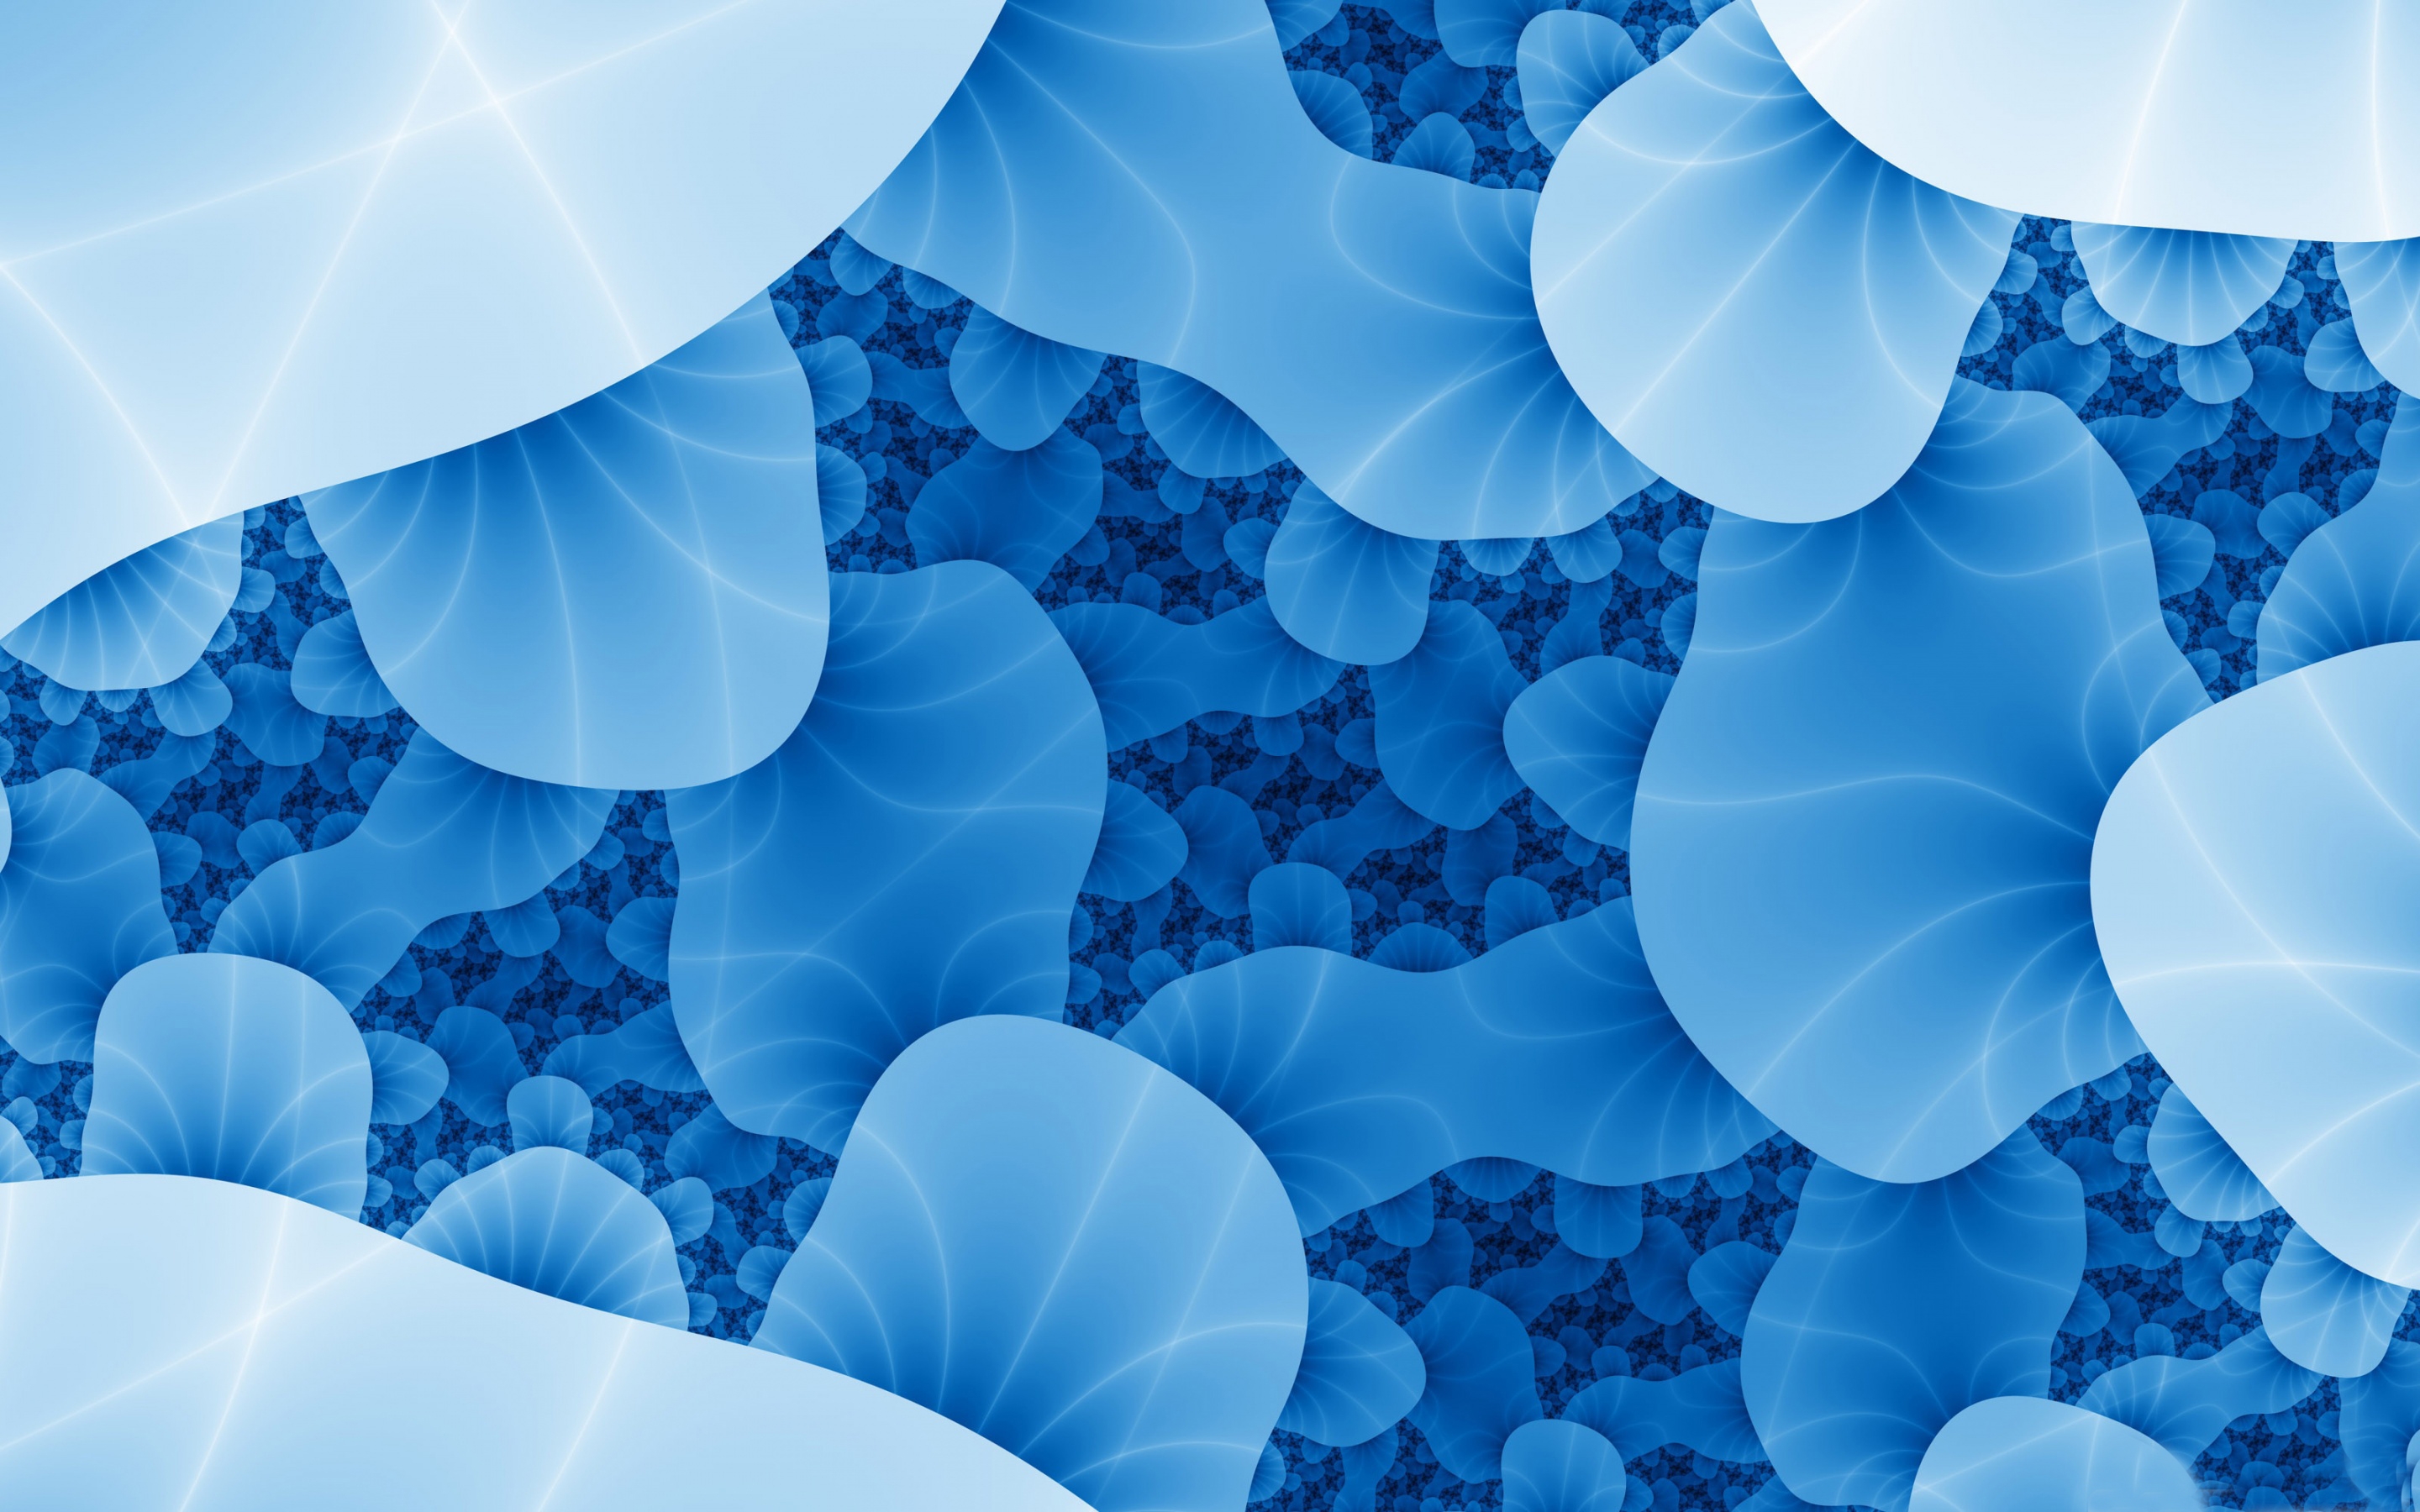 Abstract cells Mac Wallpaper Download. Free Mac Wallpaper Download